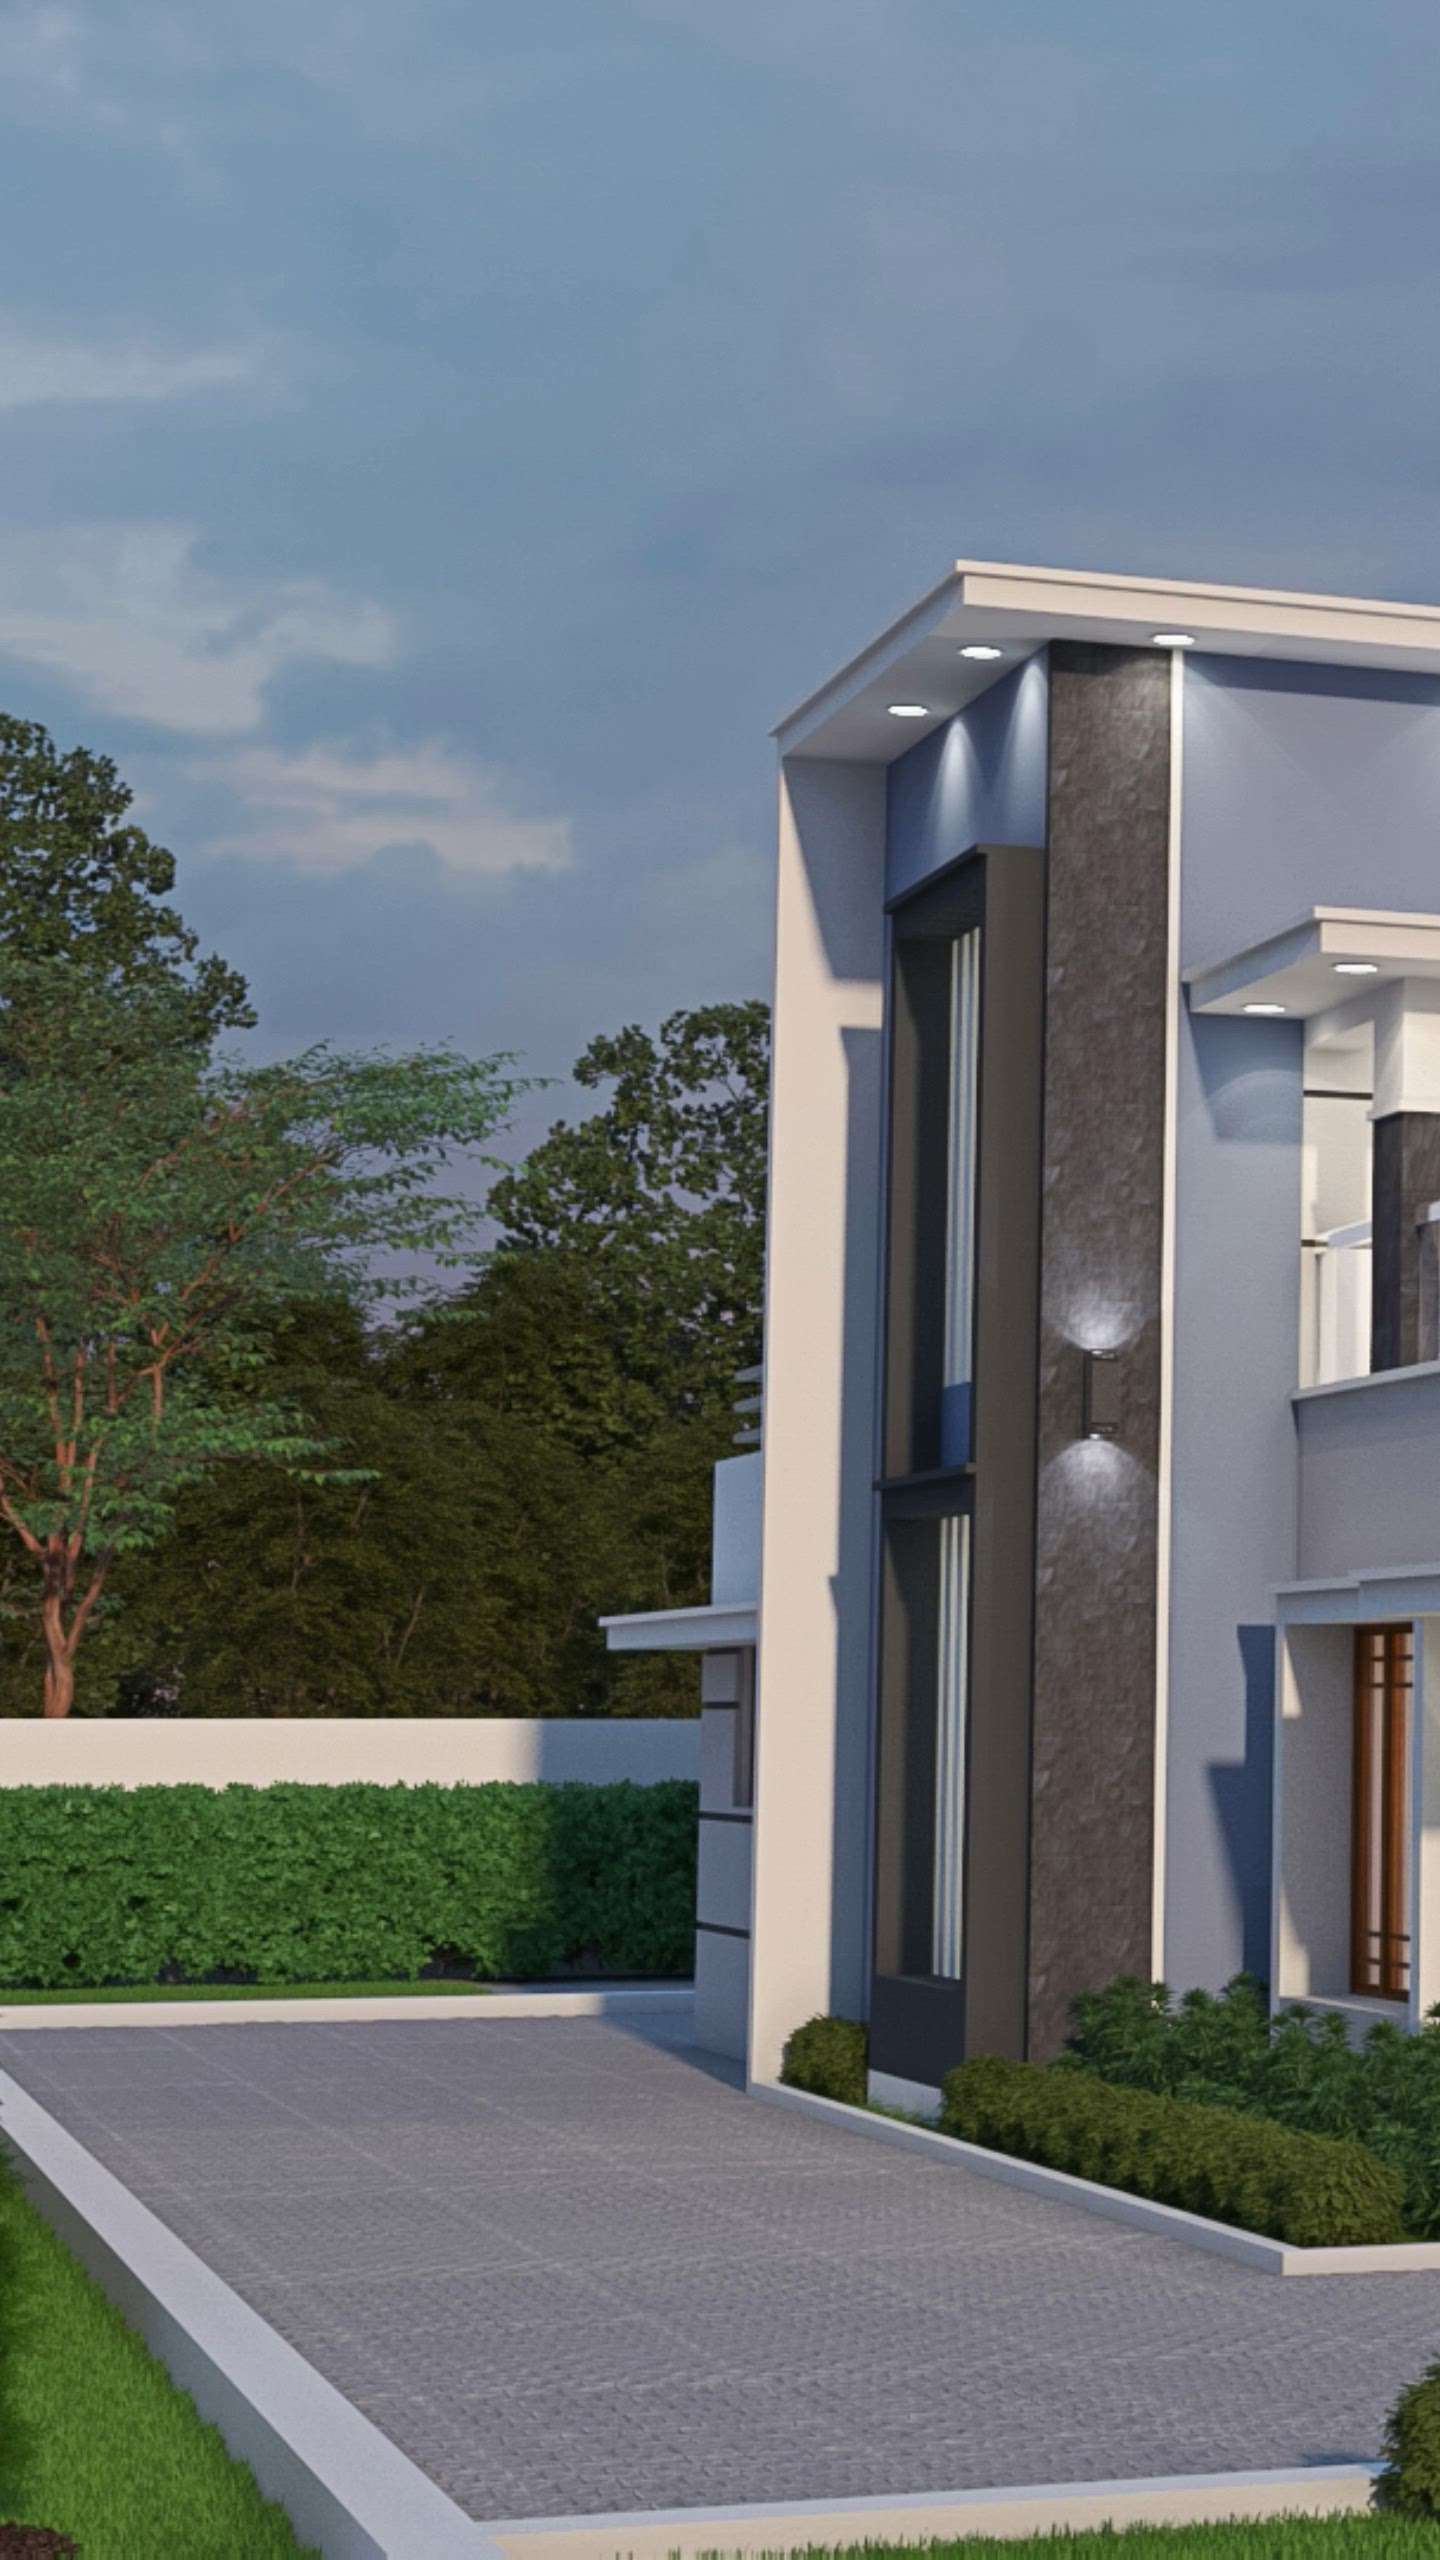 3D Exterior🏡


Contact : 6282505549

#3dsmax #3dmodeling #interiordesign #interiordesigner #interior #exterior #kottapuram #kottapurammuziris #kodungallur #thrissur #kerala #3dvisualization  #interiorstyling #exteriordesign #interiordesign #architecture #design #exterior #homedecor #interior #home #homedesign